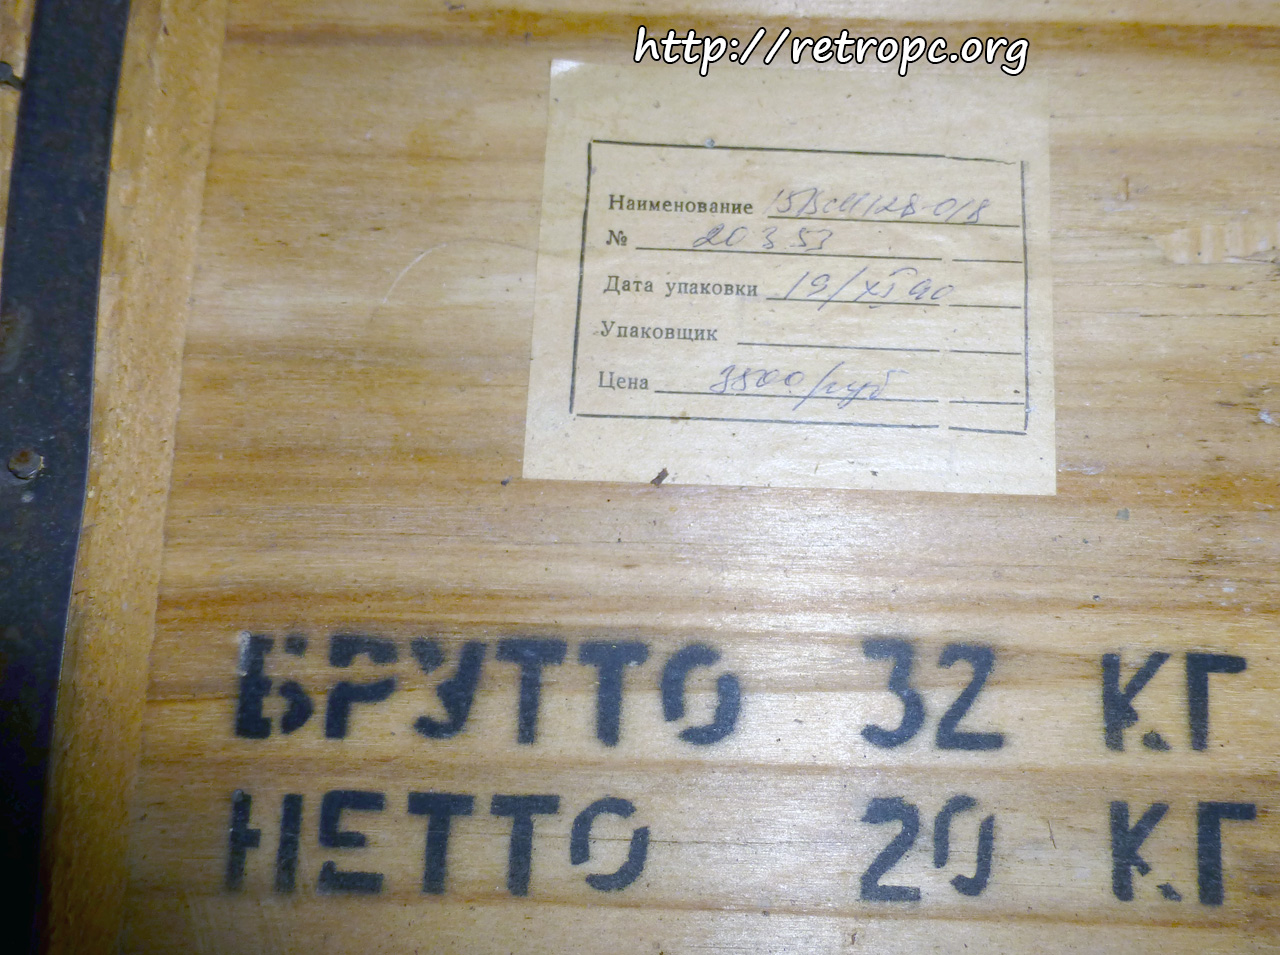 Электроника Д3-28 тип 15ВМ128-018 - этикетка на ящике